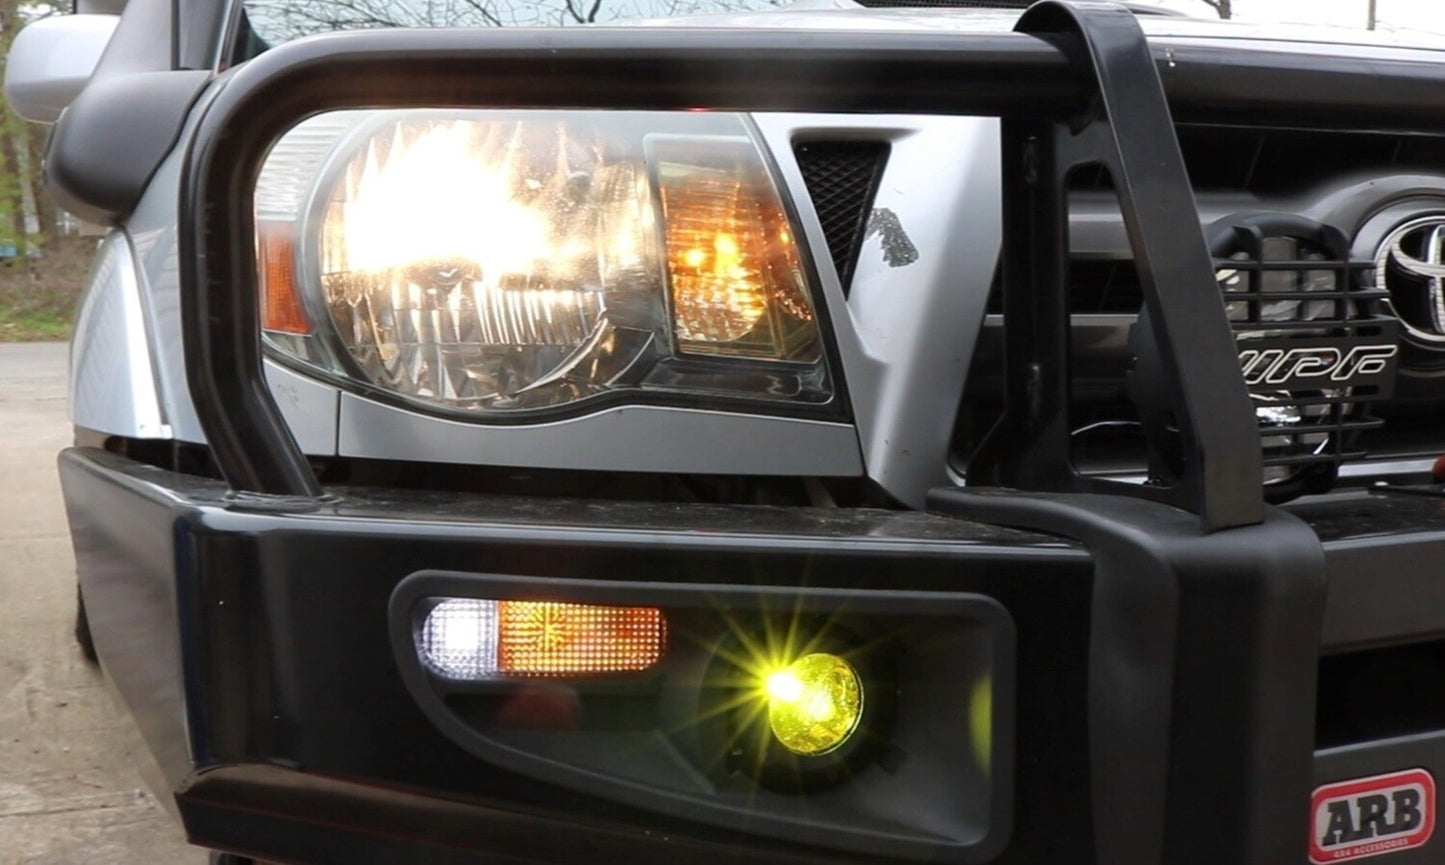 Universal ARB Fog Light Bracket For ARB Bumpers Toyota Tacoma/Nissan Xterra